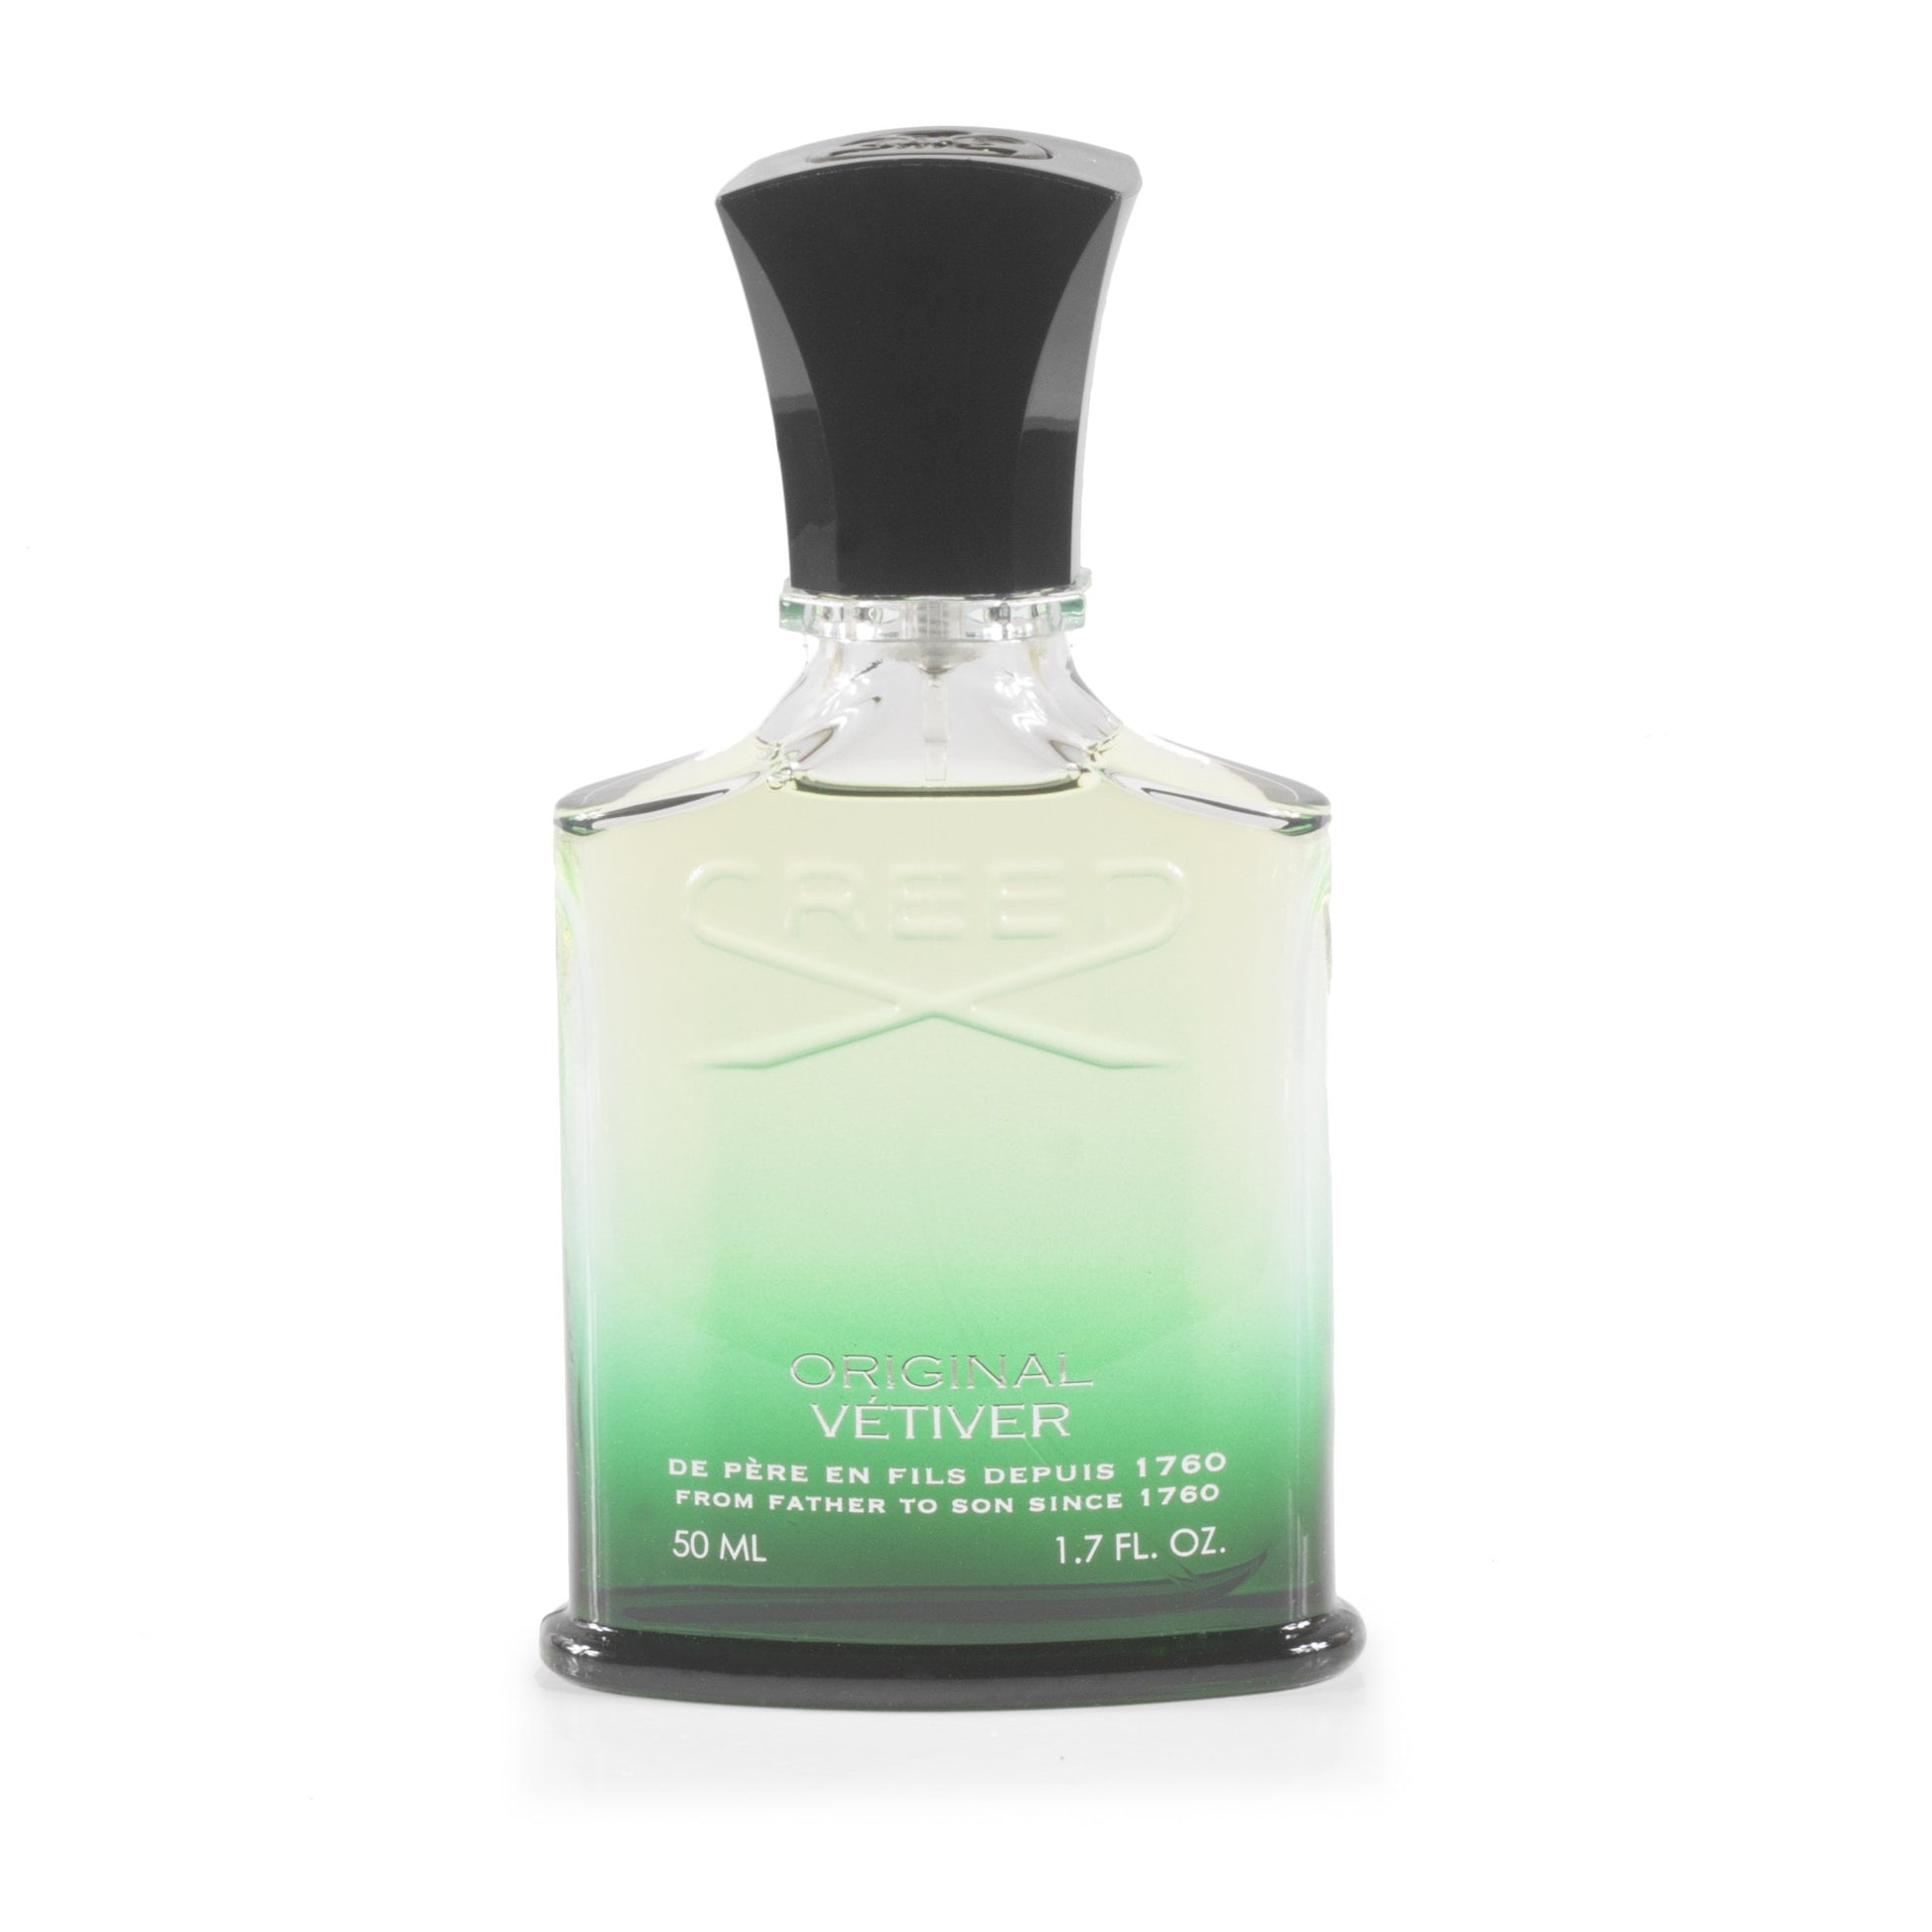 Original Vetiver Eau de Parfum Spray for Men by Creed, Product image 2